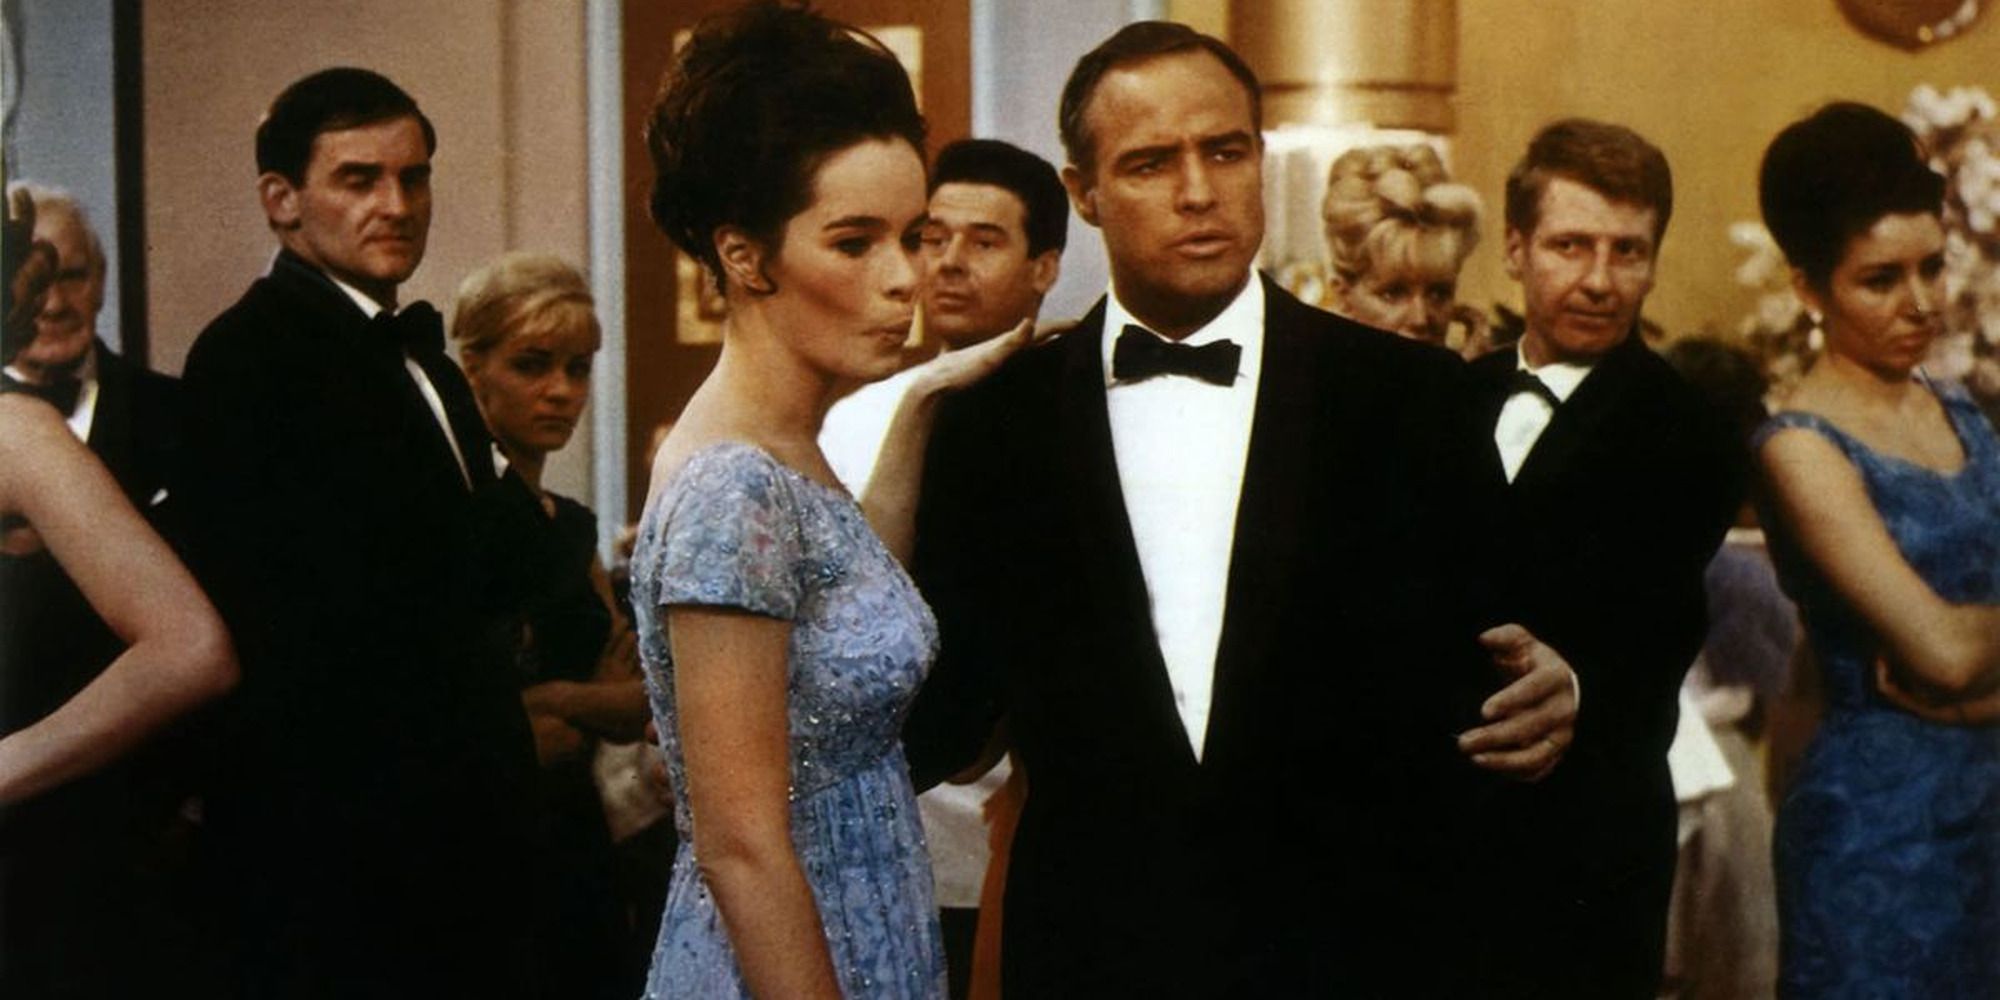 Marlon Brando and Sophia Loren in A Countess from Hong Kong